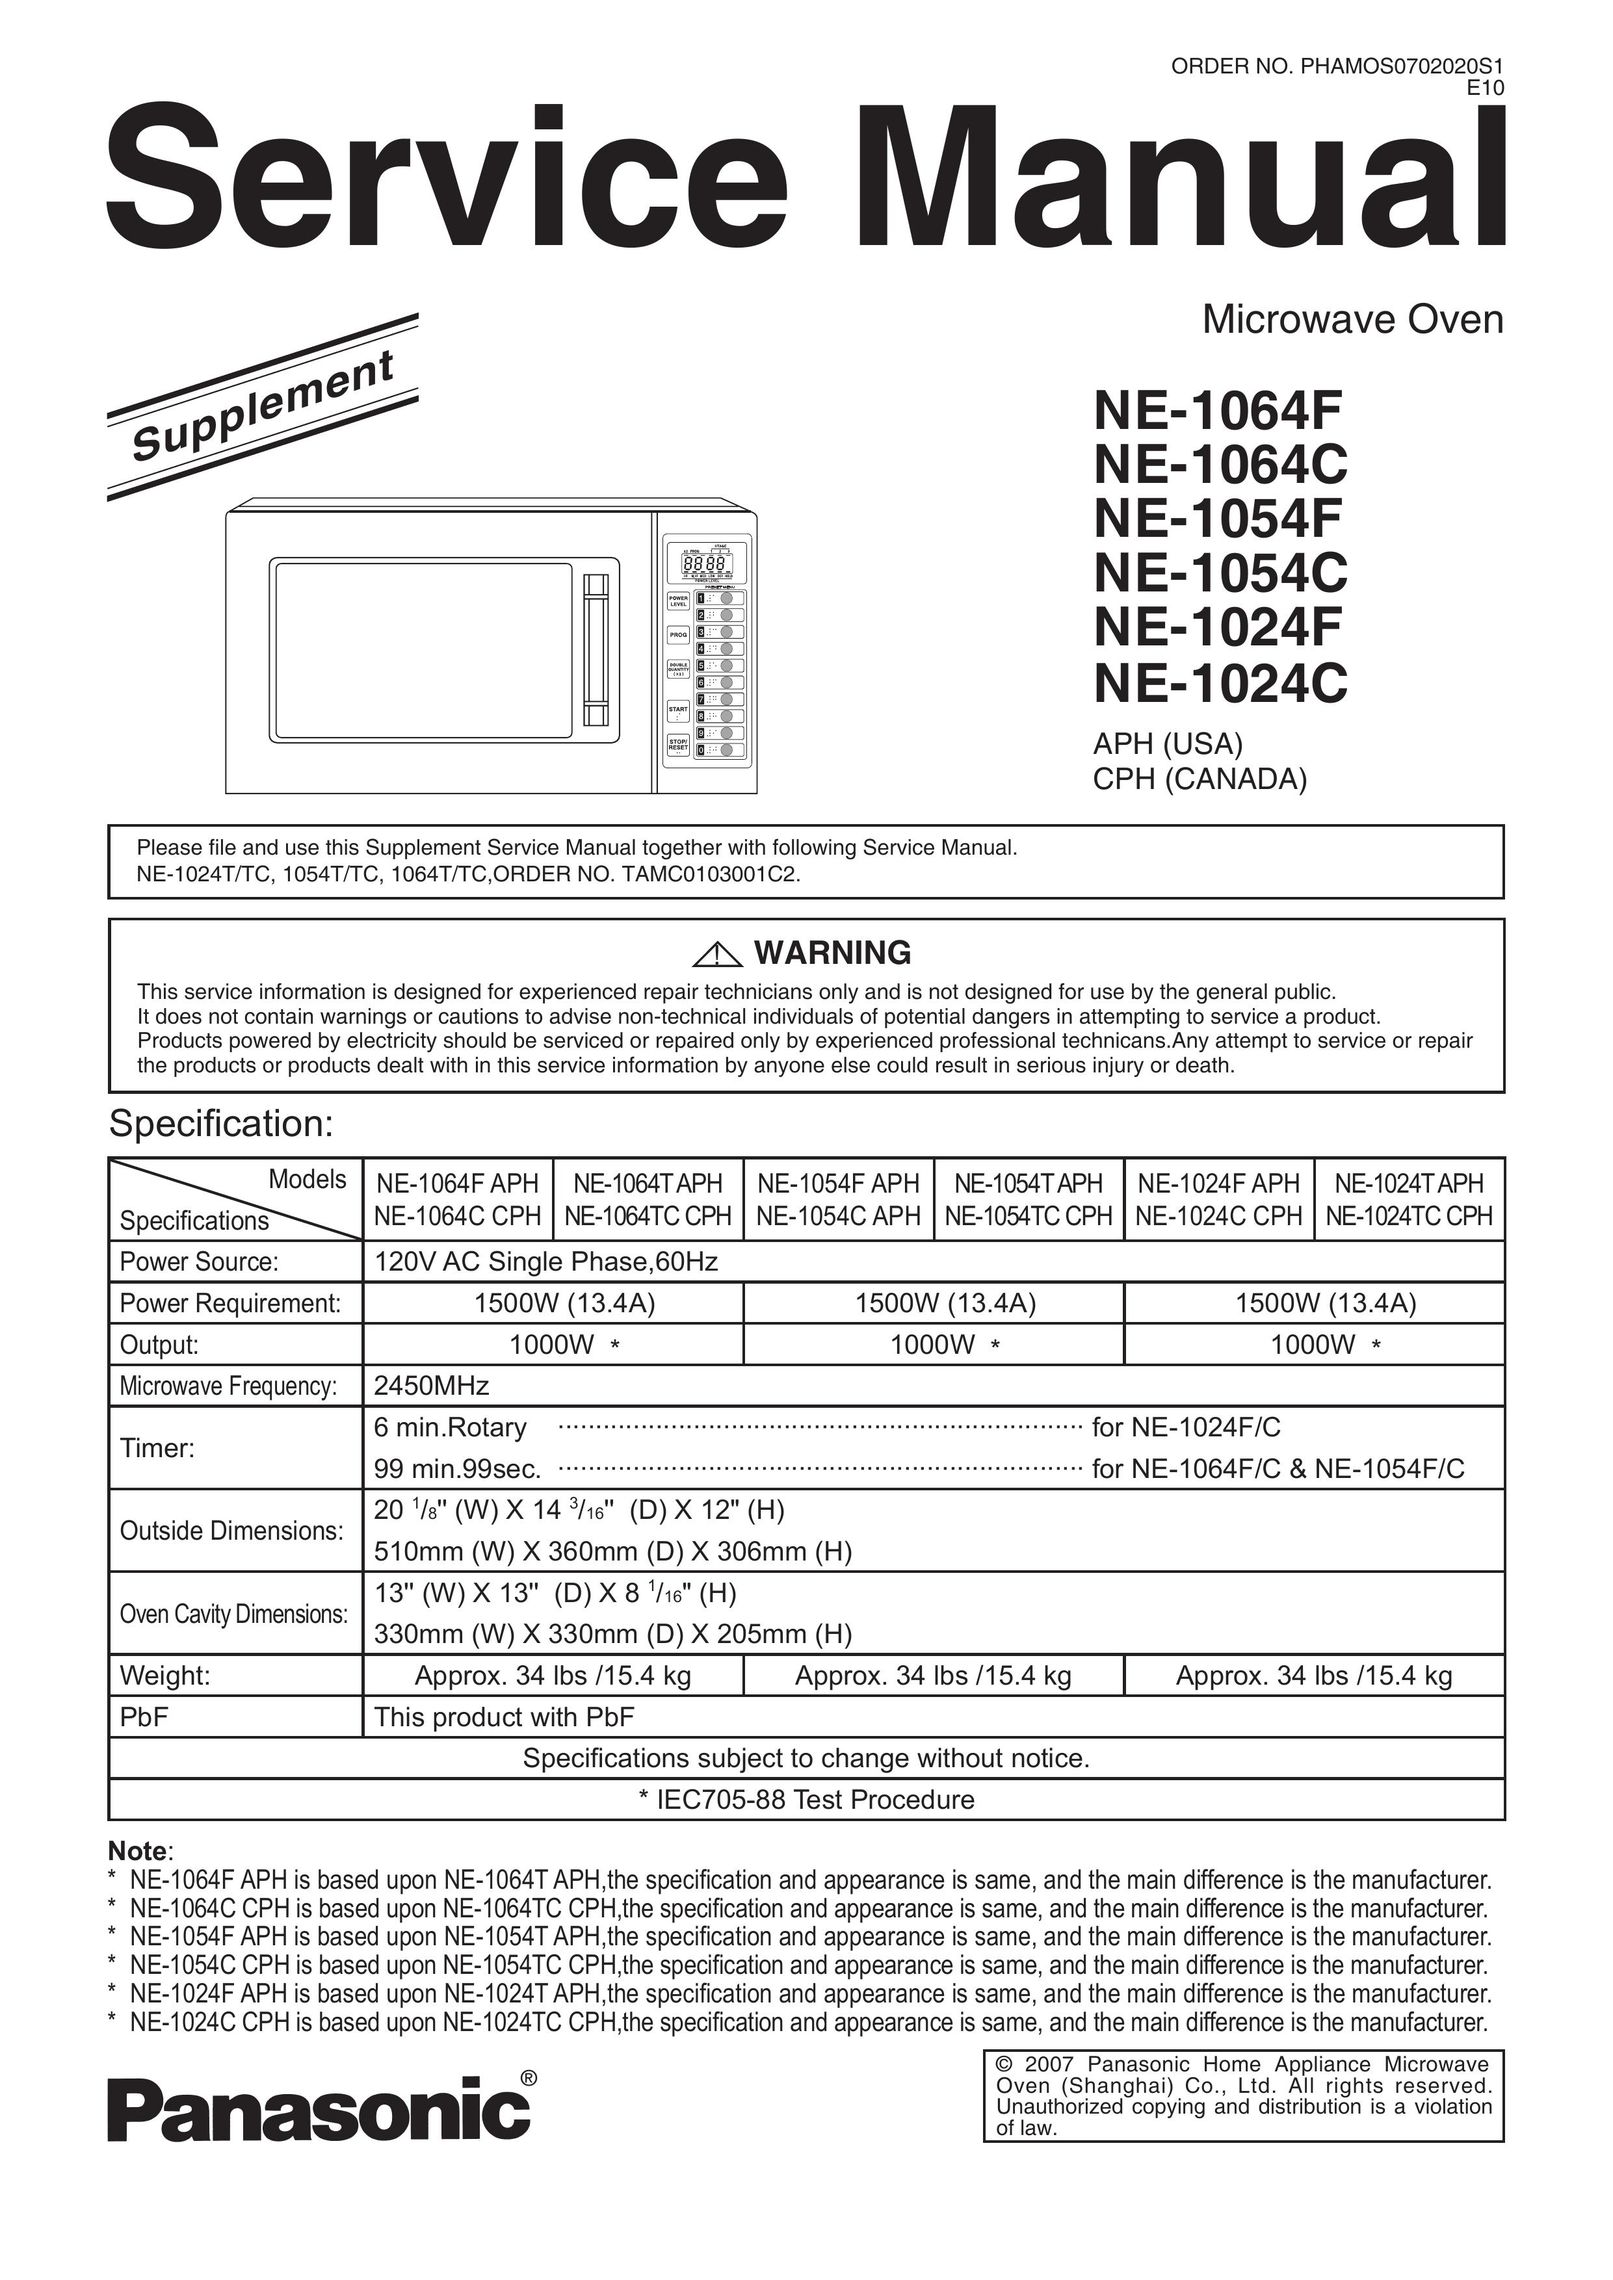 Panasonic NE-1024F Microwave Oven User Manual